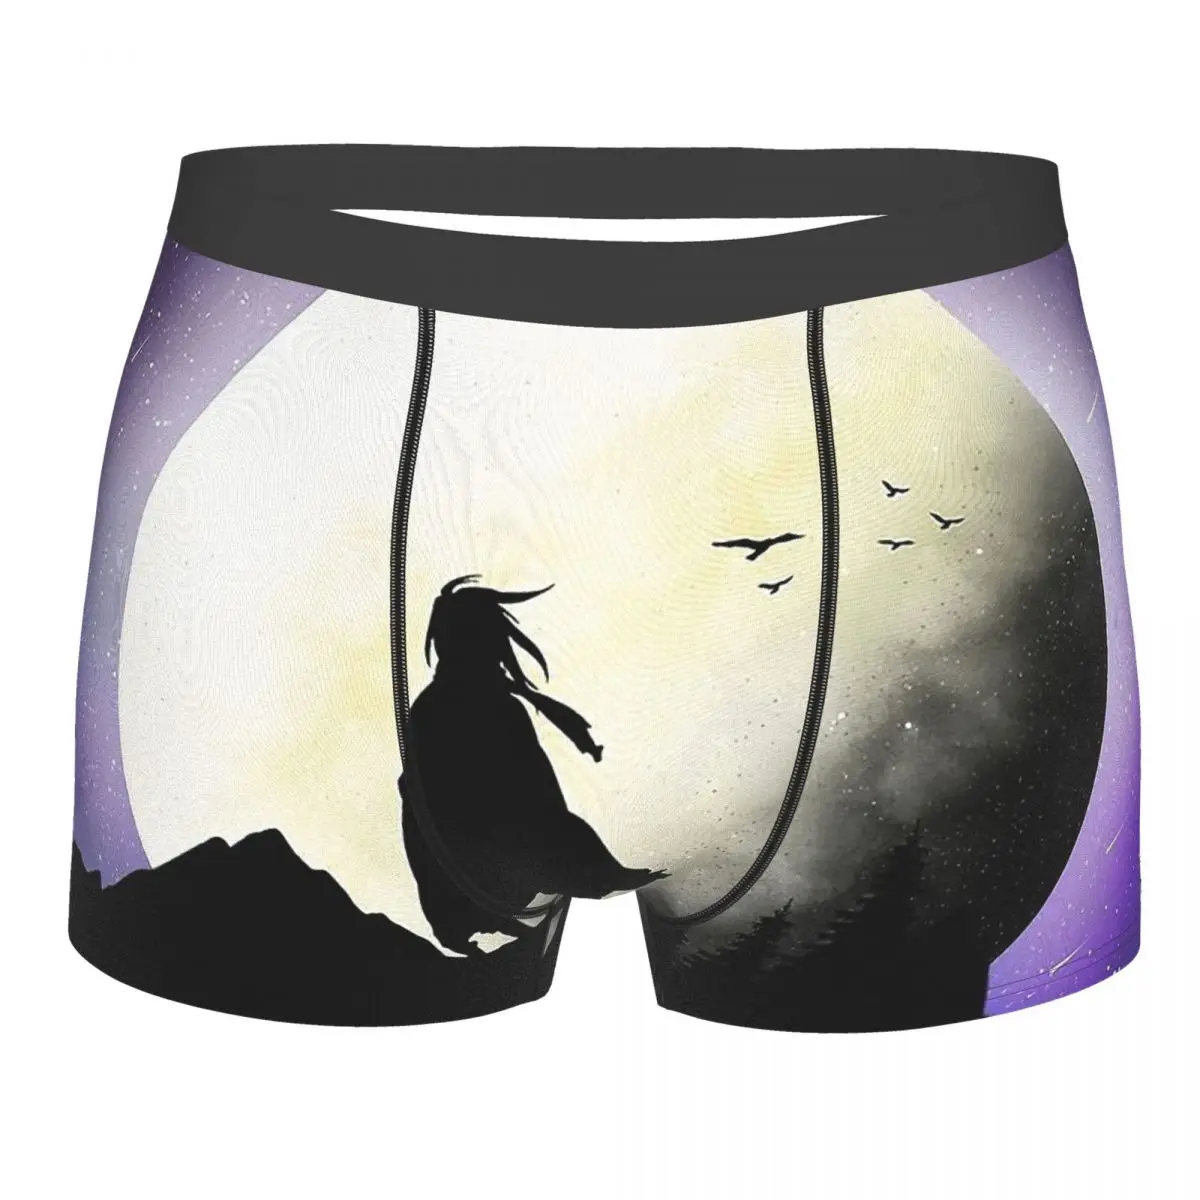 

Swordsman Dororo Fantasy Action Animation TV Series Underpants Breathbale Panties Men's Underwear Print Shorts Boxer Briefs